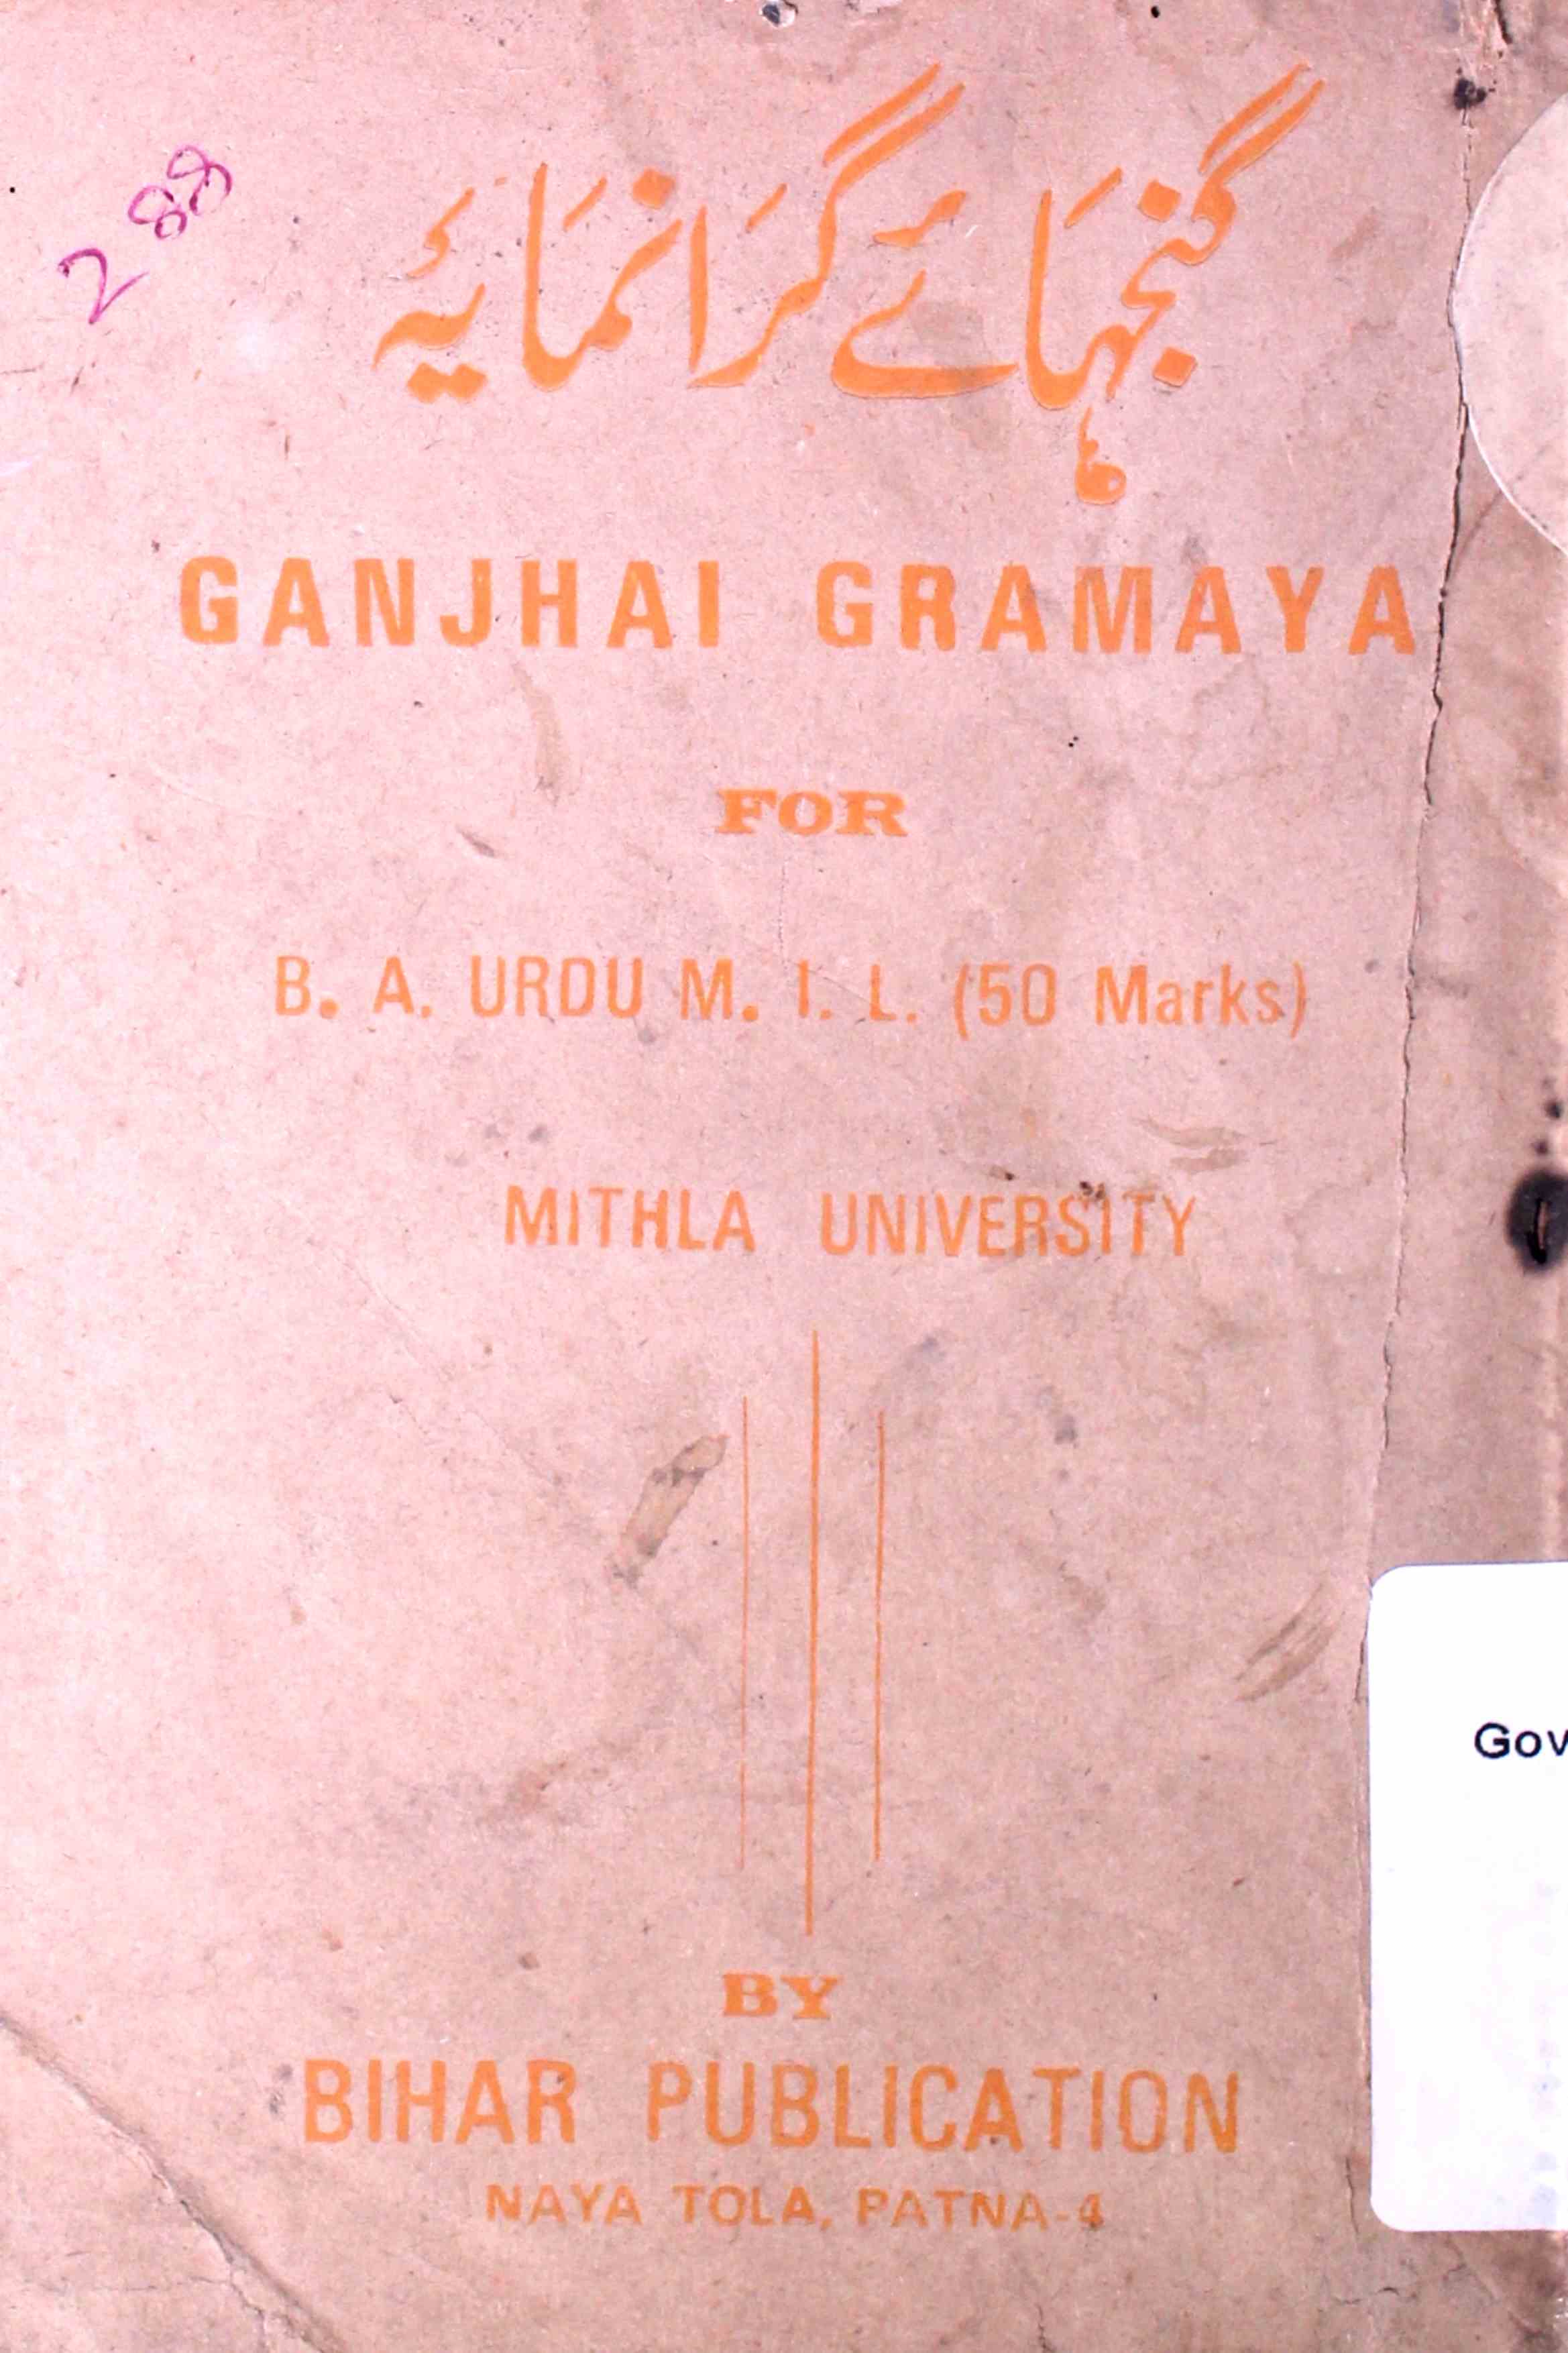 Ganjaha-e-Granmaya